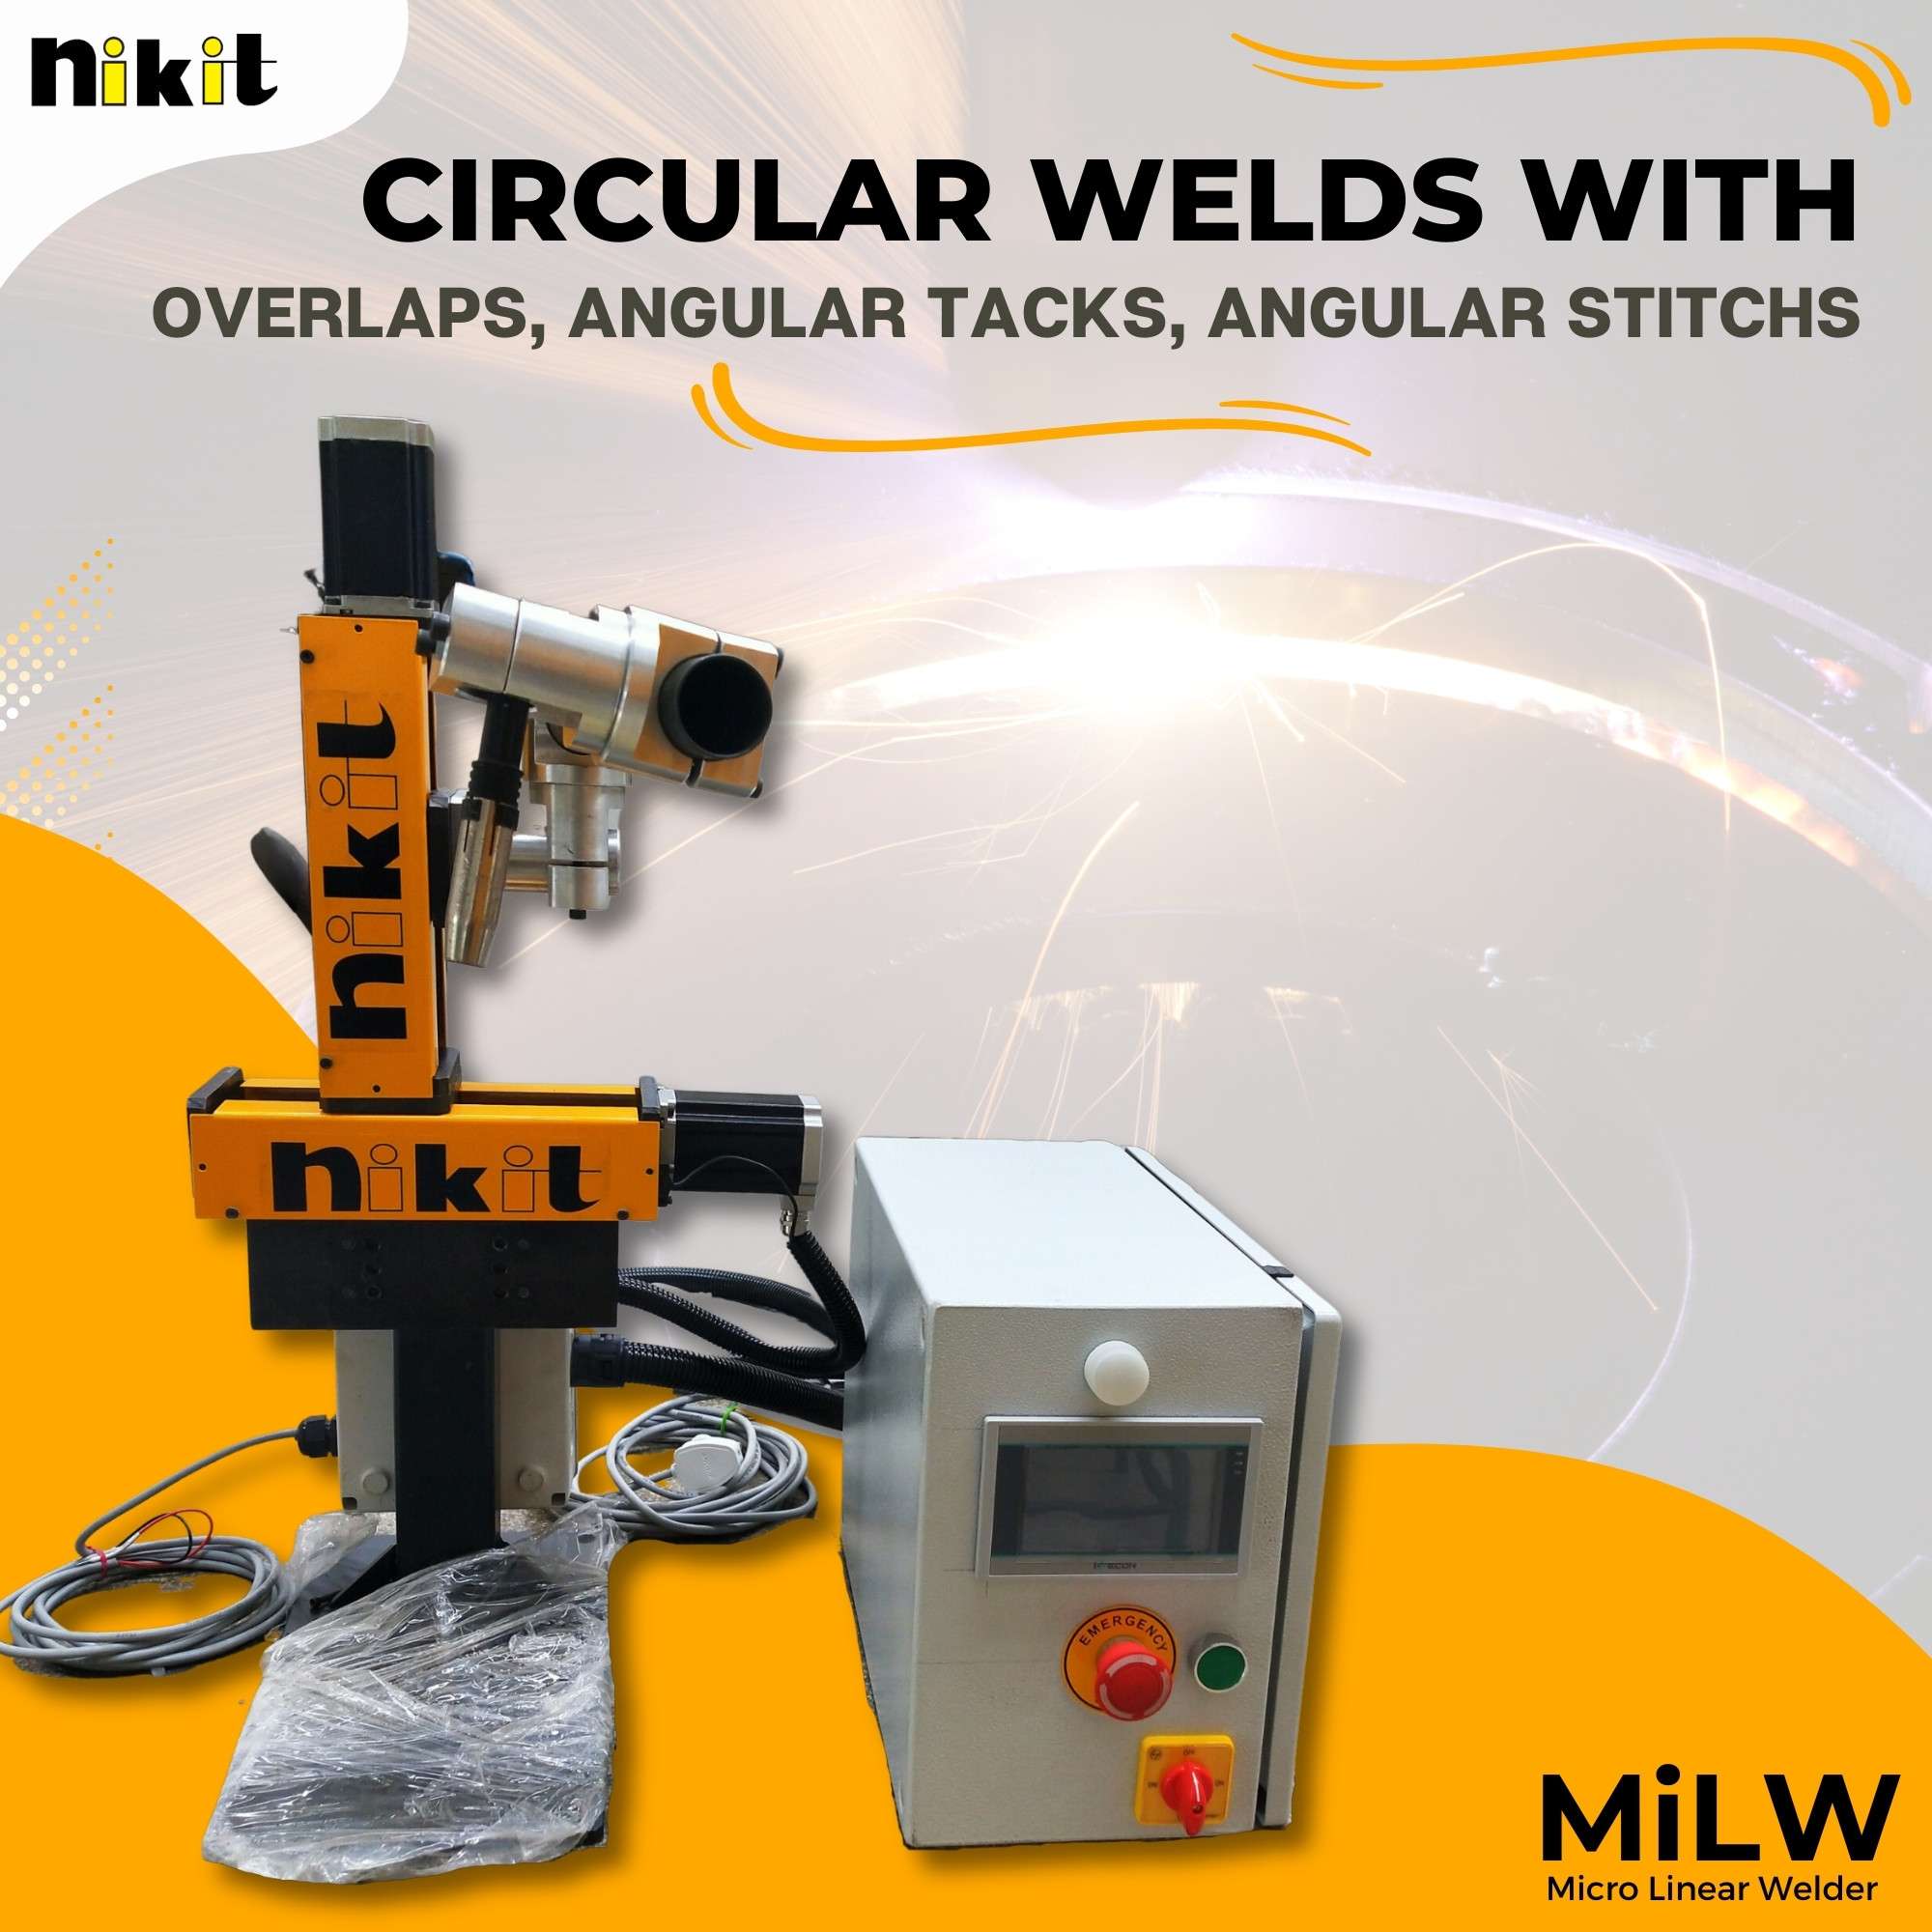 nikti-engineers-welding-automation-micro-linear-welder-welding-product-india-milw-circular-weld-overlap-weld-angular-tacks-stitchs